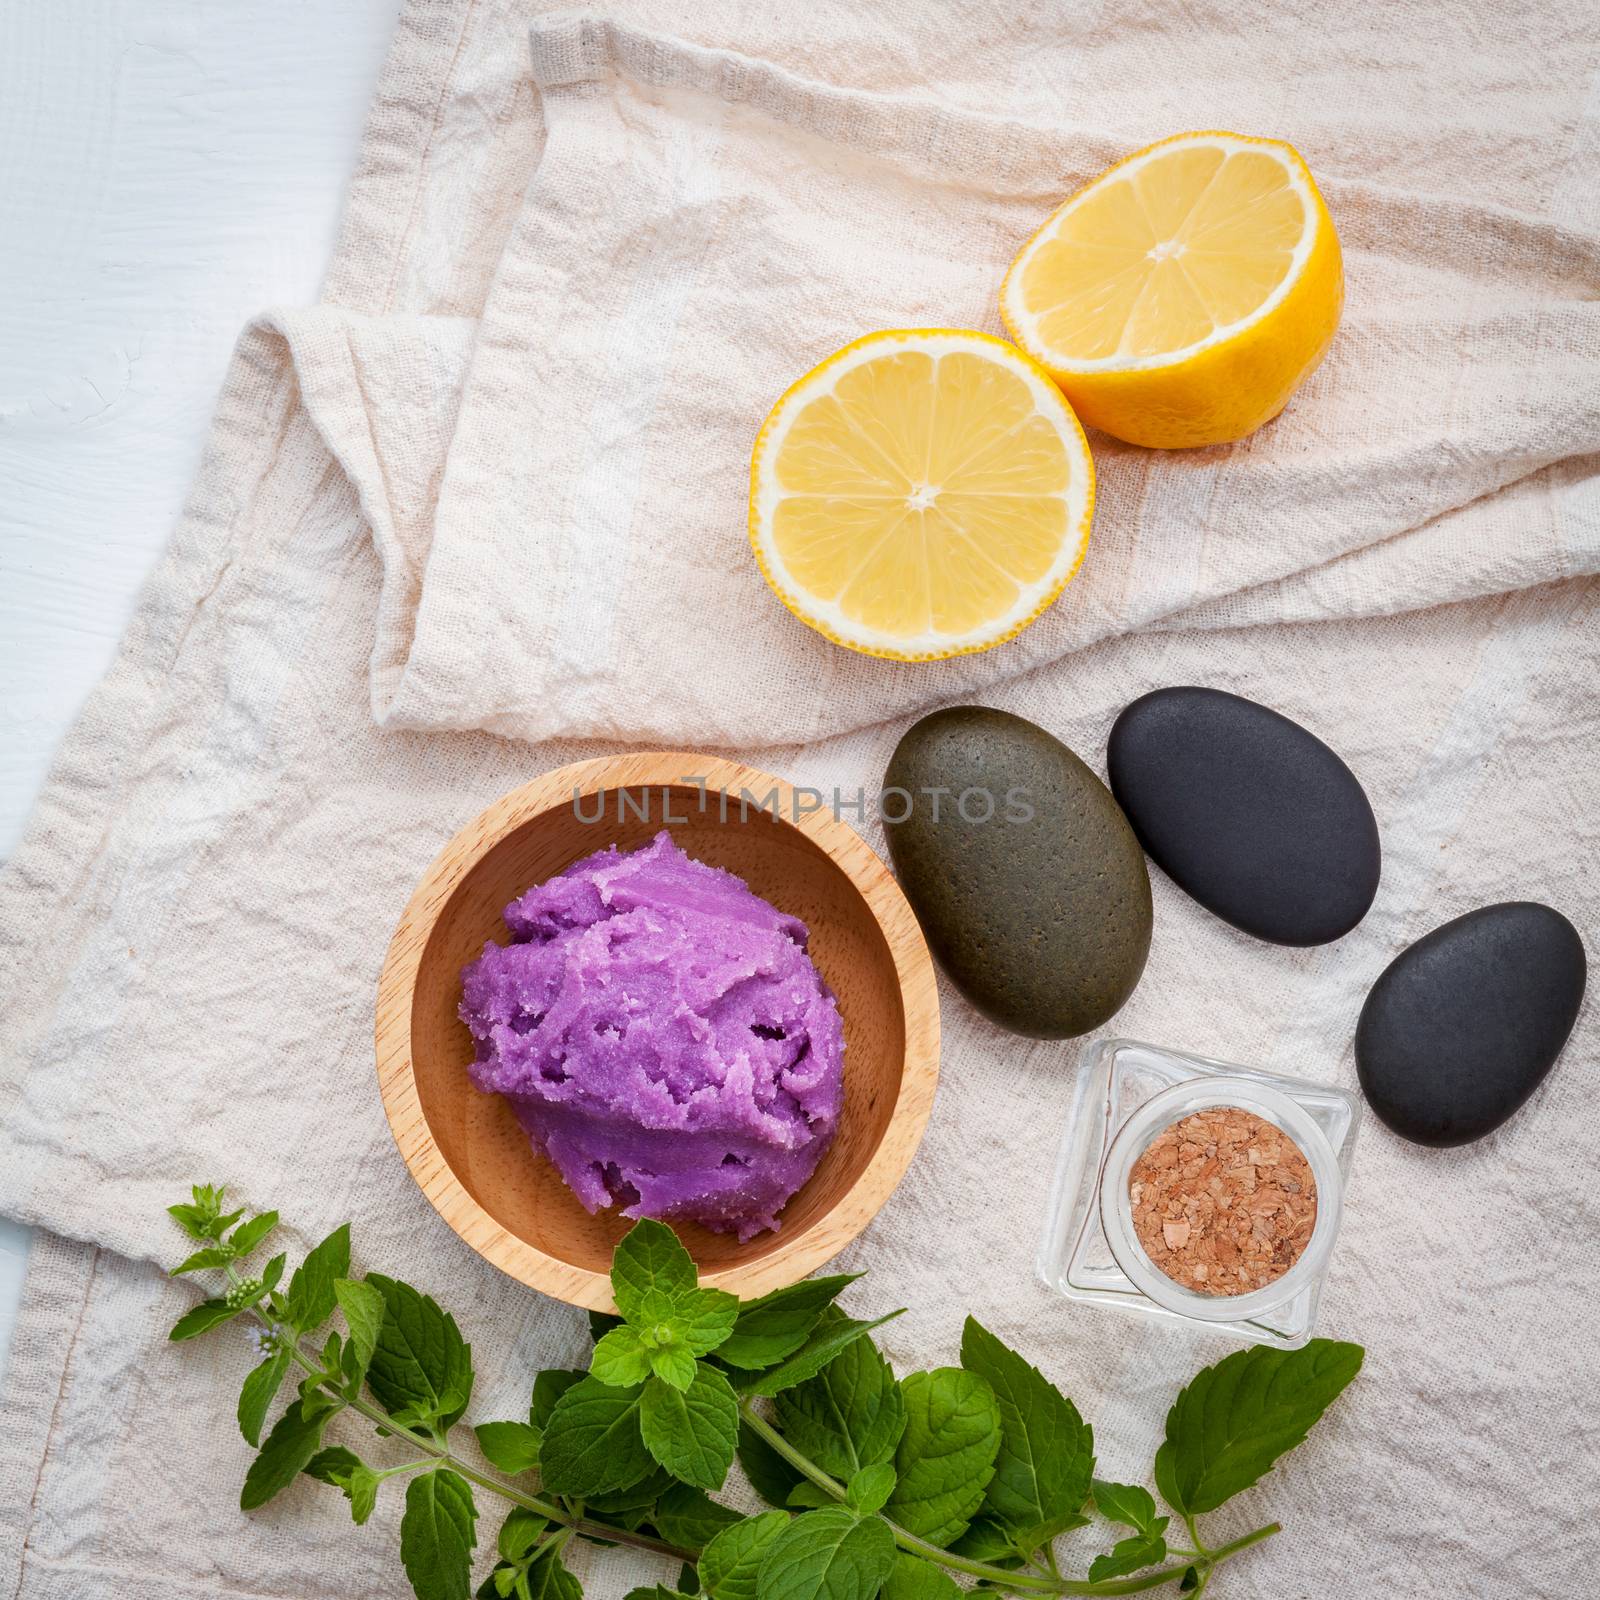 Alternative skin care lavender scrubs with natural ingredients l by kerdkanno